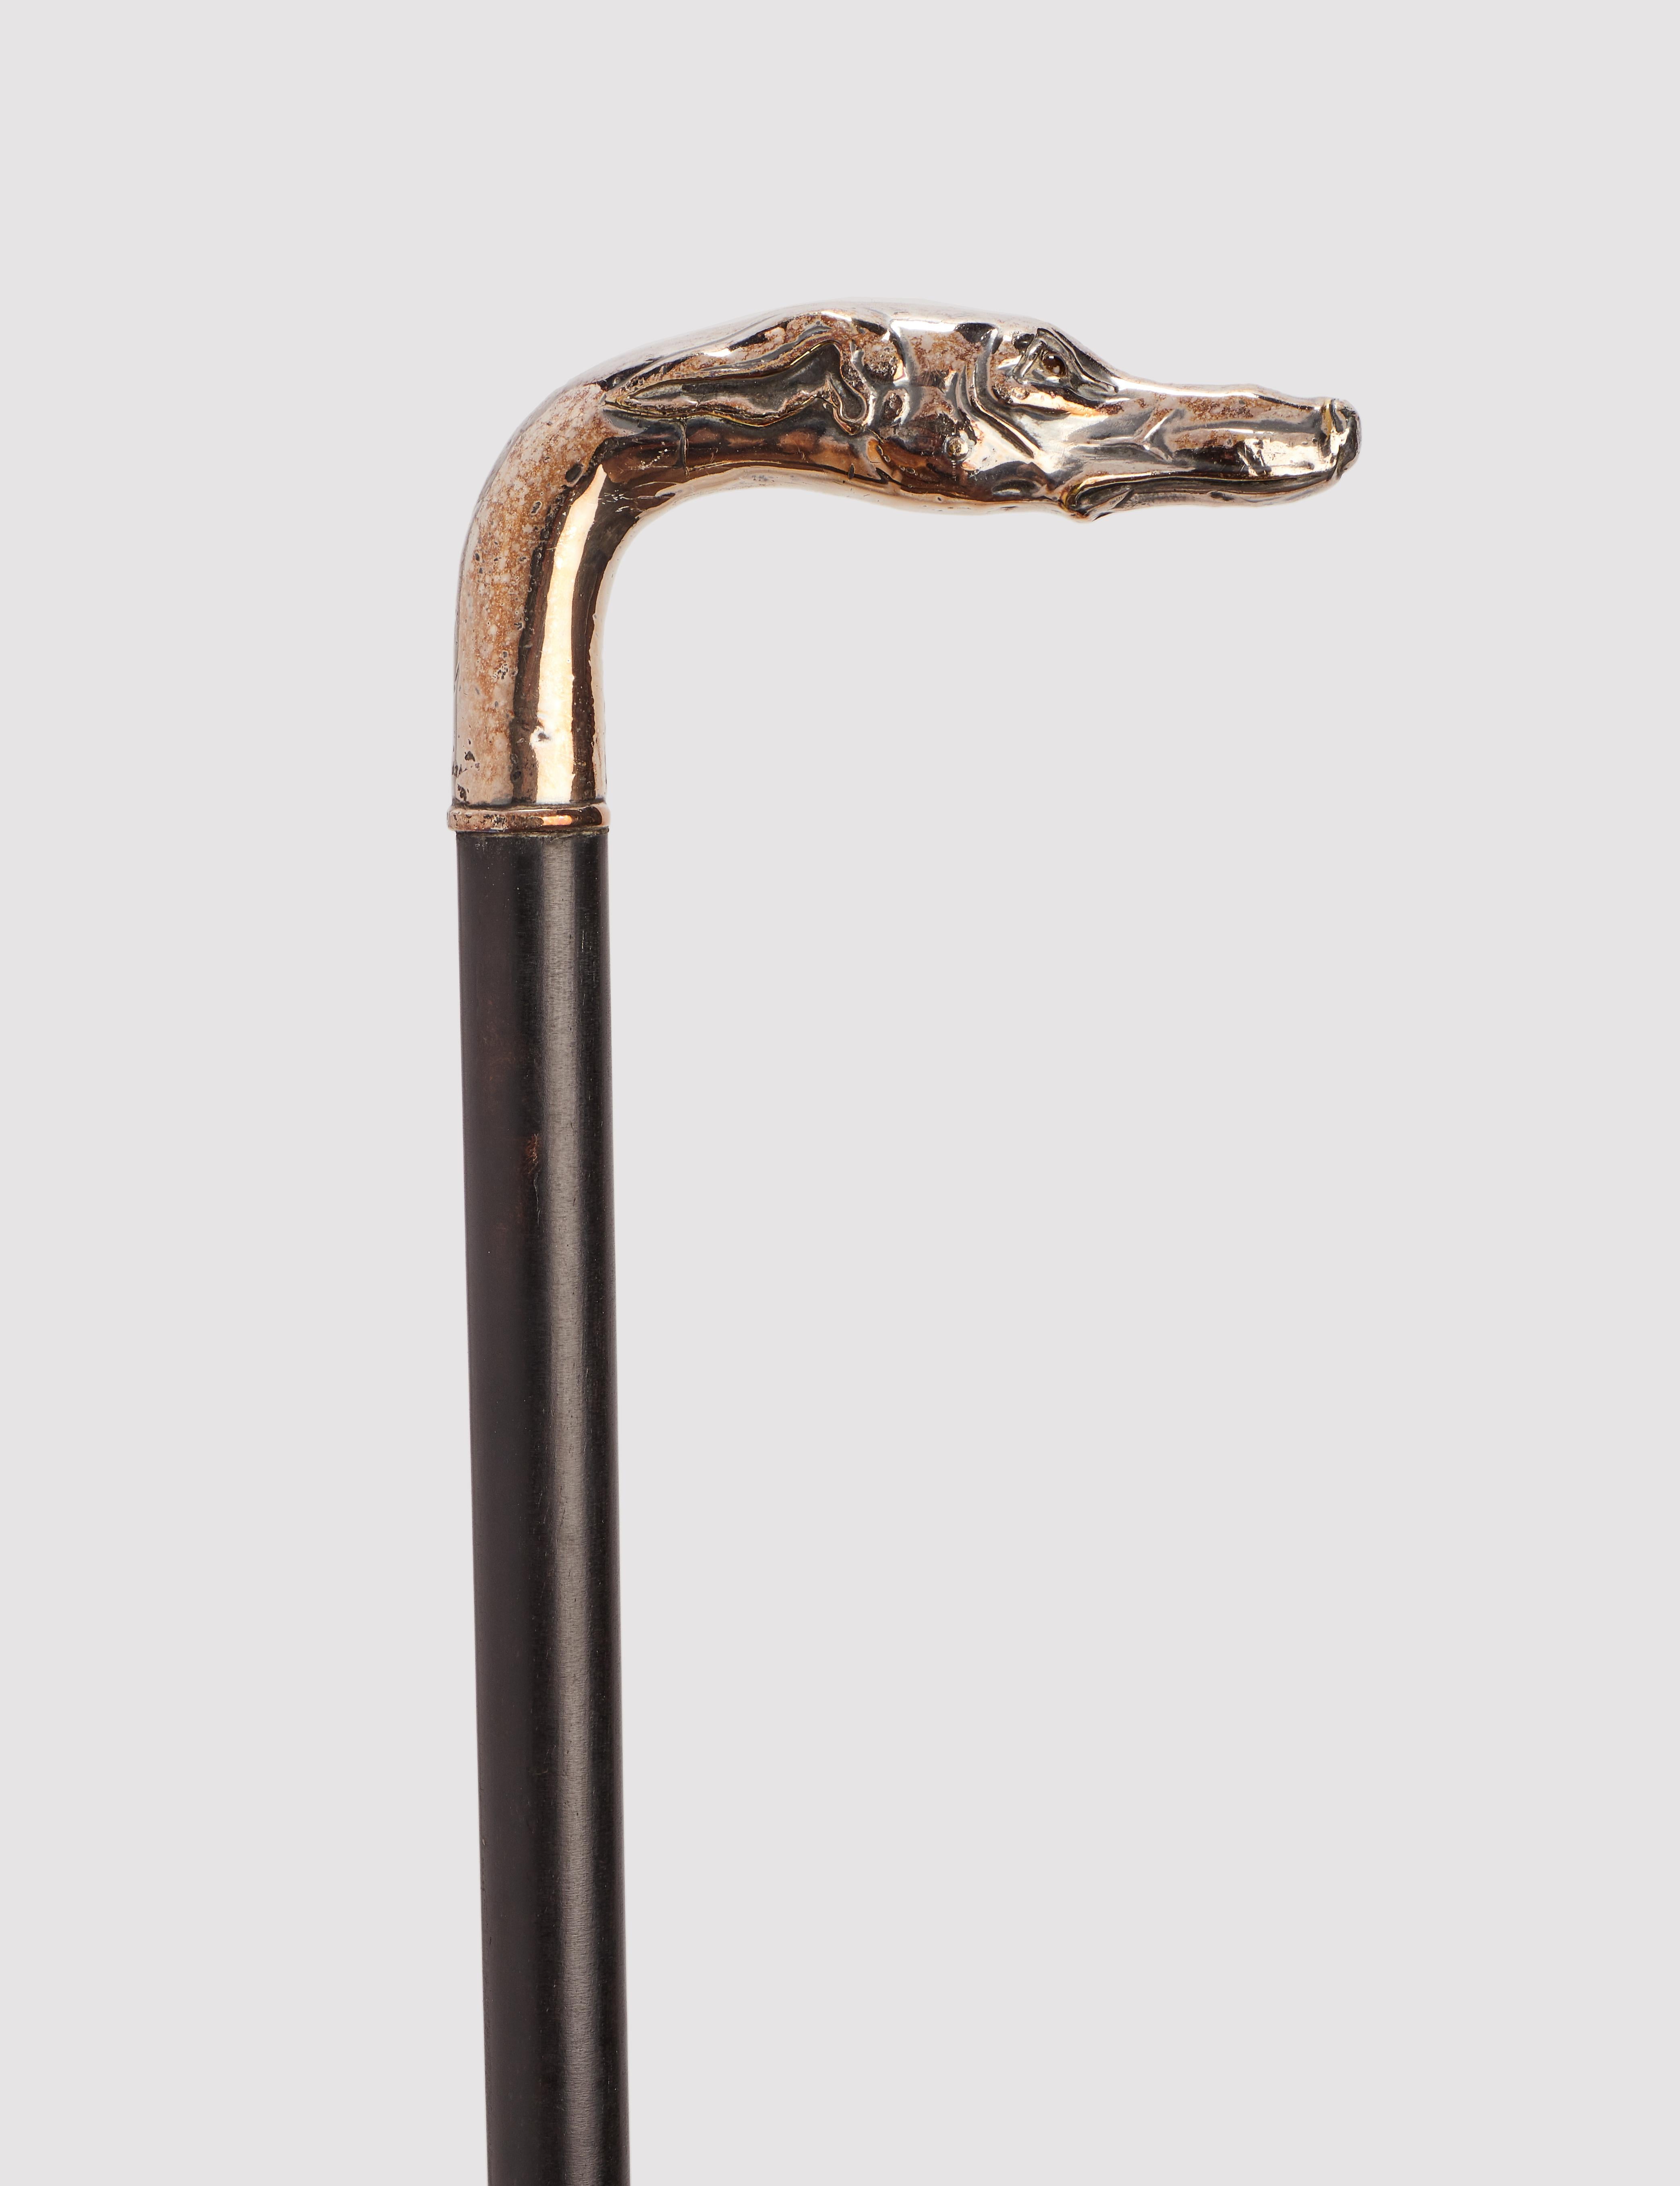 Walking stick: silver handle, depicting the head of a whippet dog. Ebony wood shaft. Metal ferrule. Germany 1900 ca.